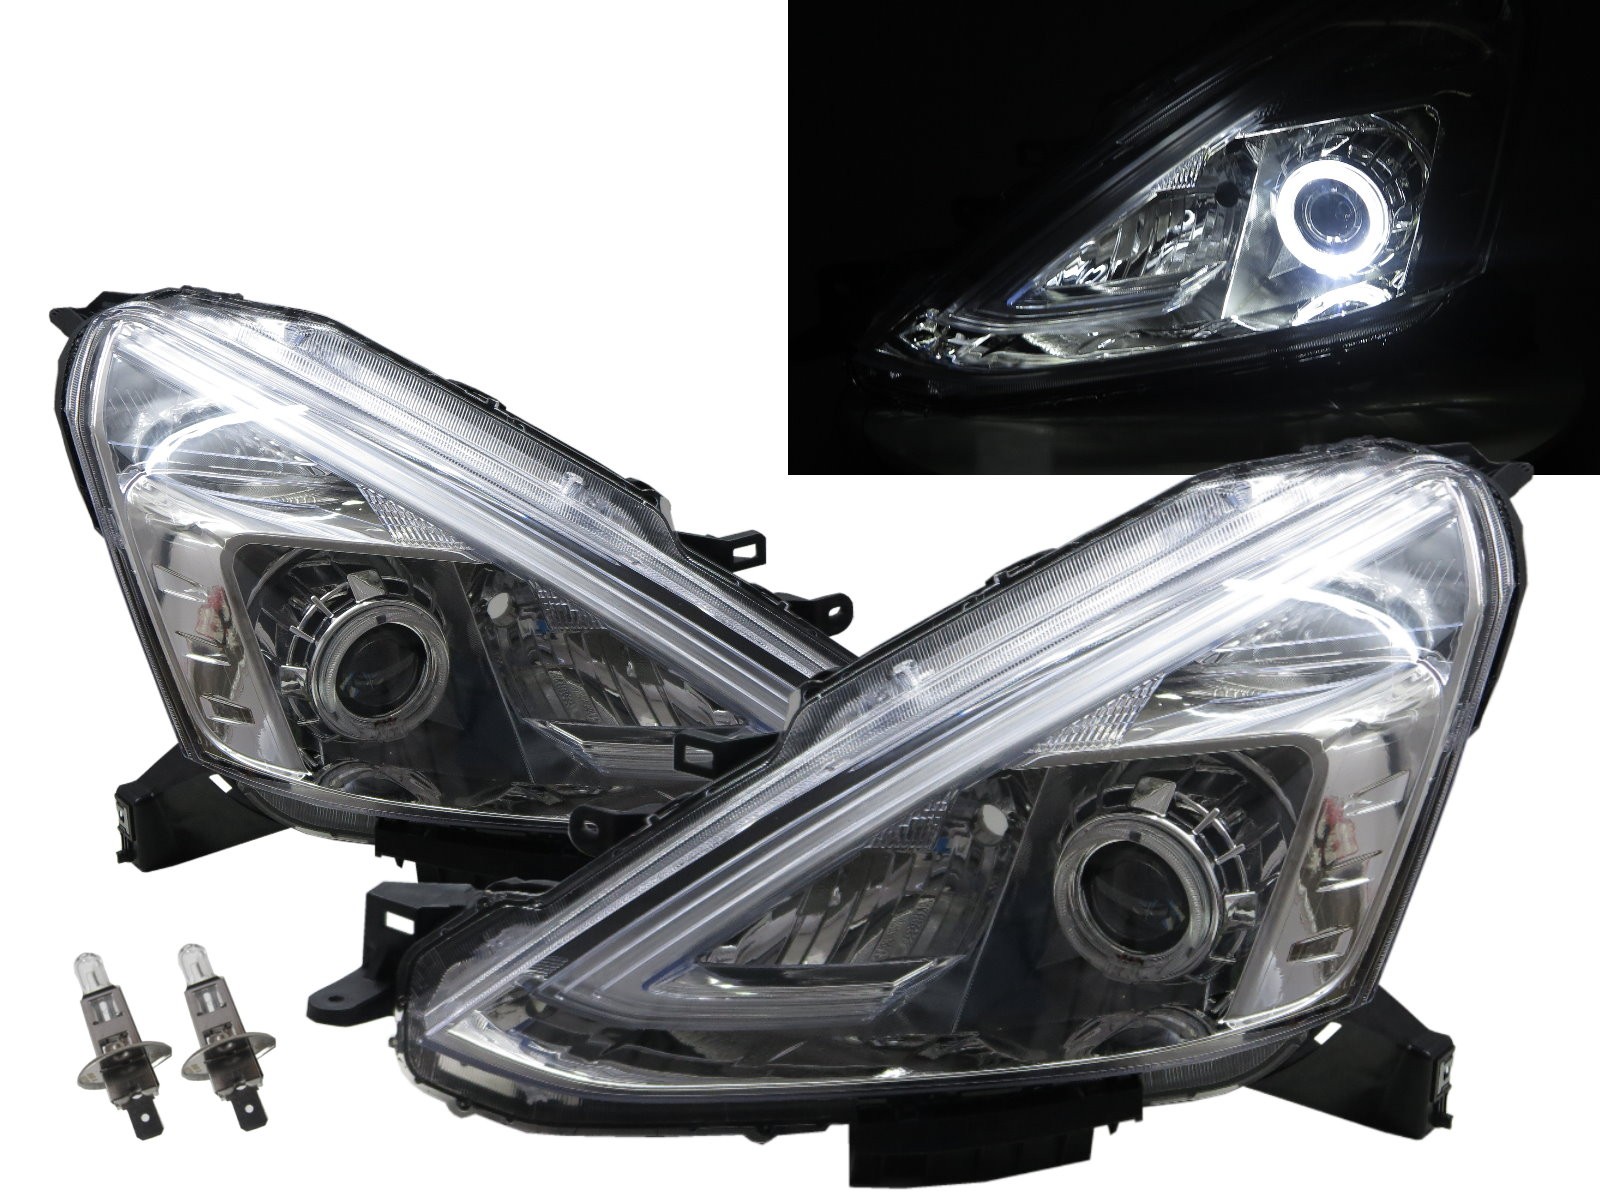 CrazyTheGod Livina X-Gear L11 Second generation 2013-Present MPV 5D Guide LED Angel-Eye Projector Headlight Headlamp W/ Motor Chrome for NISSAN LHD